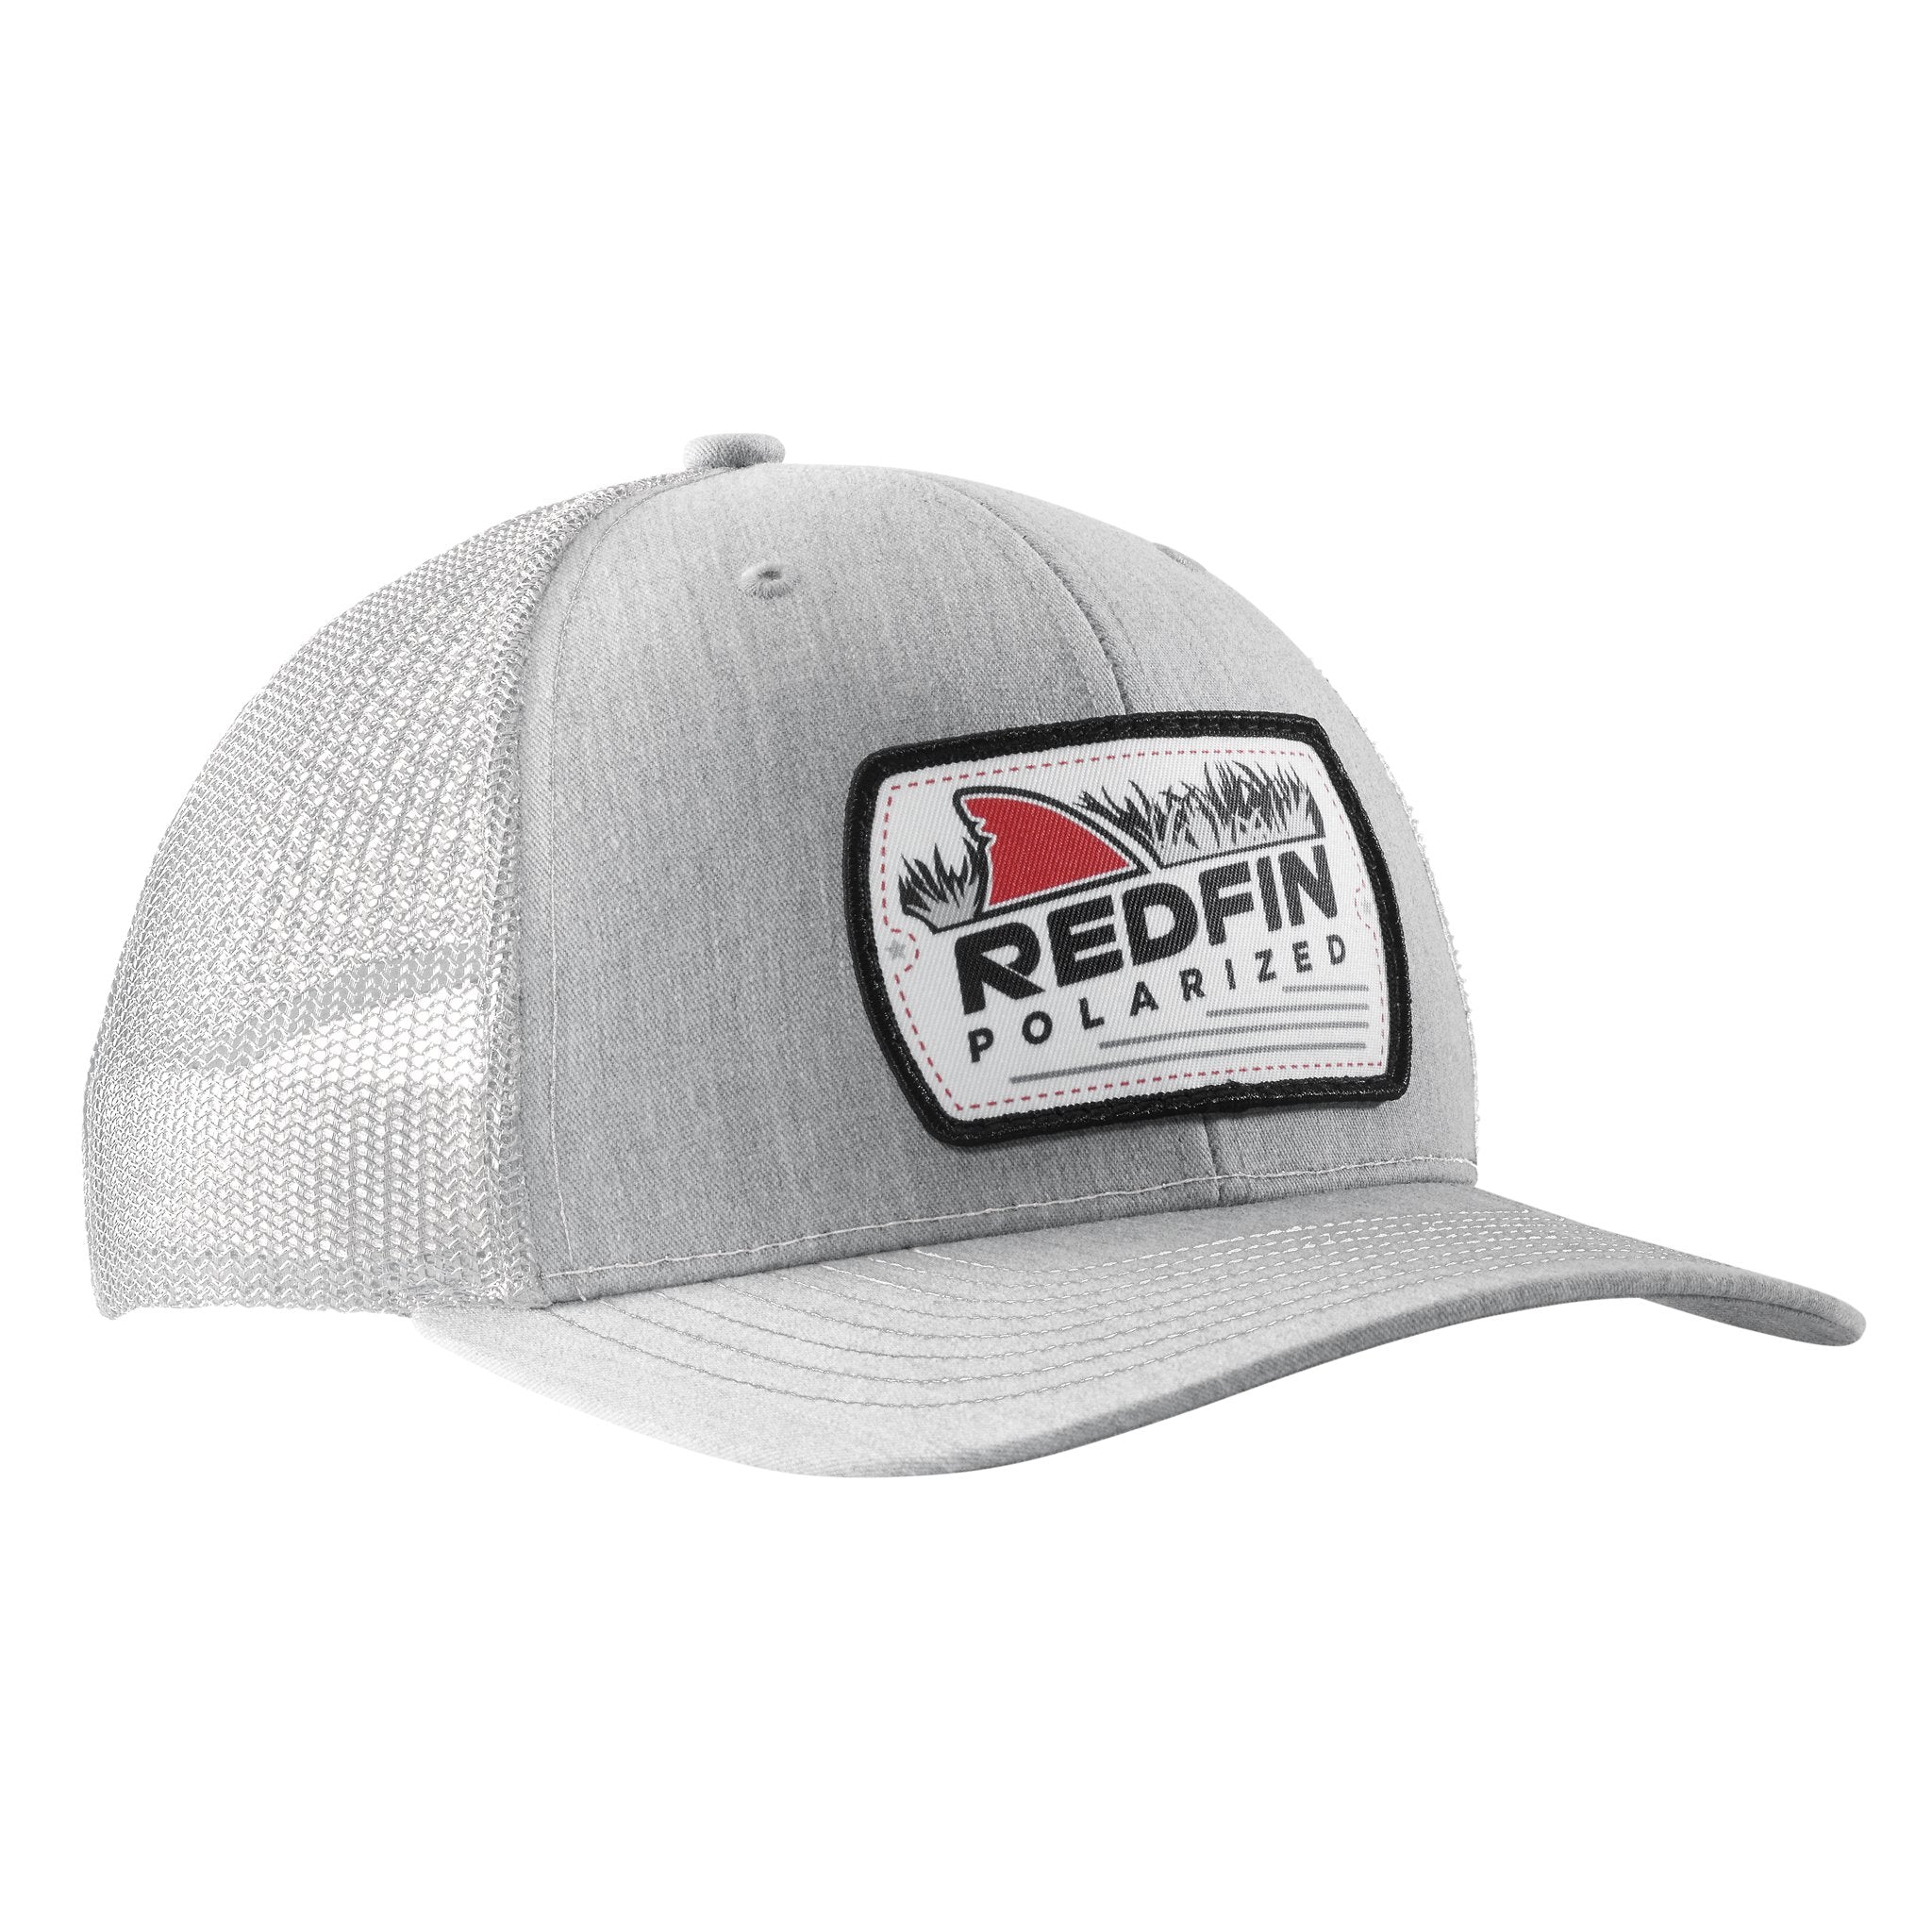 TUCR Fishing Hat Cap Red Adult Used Mesh Snapback R2